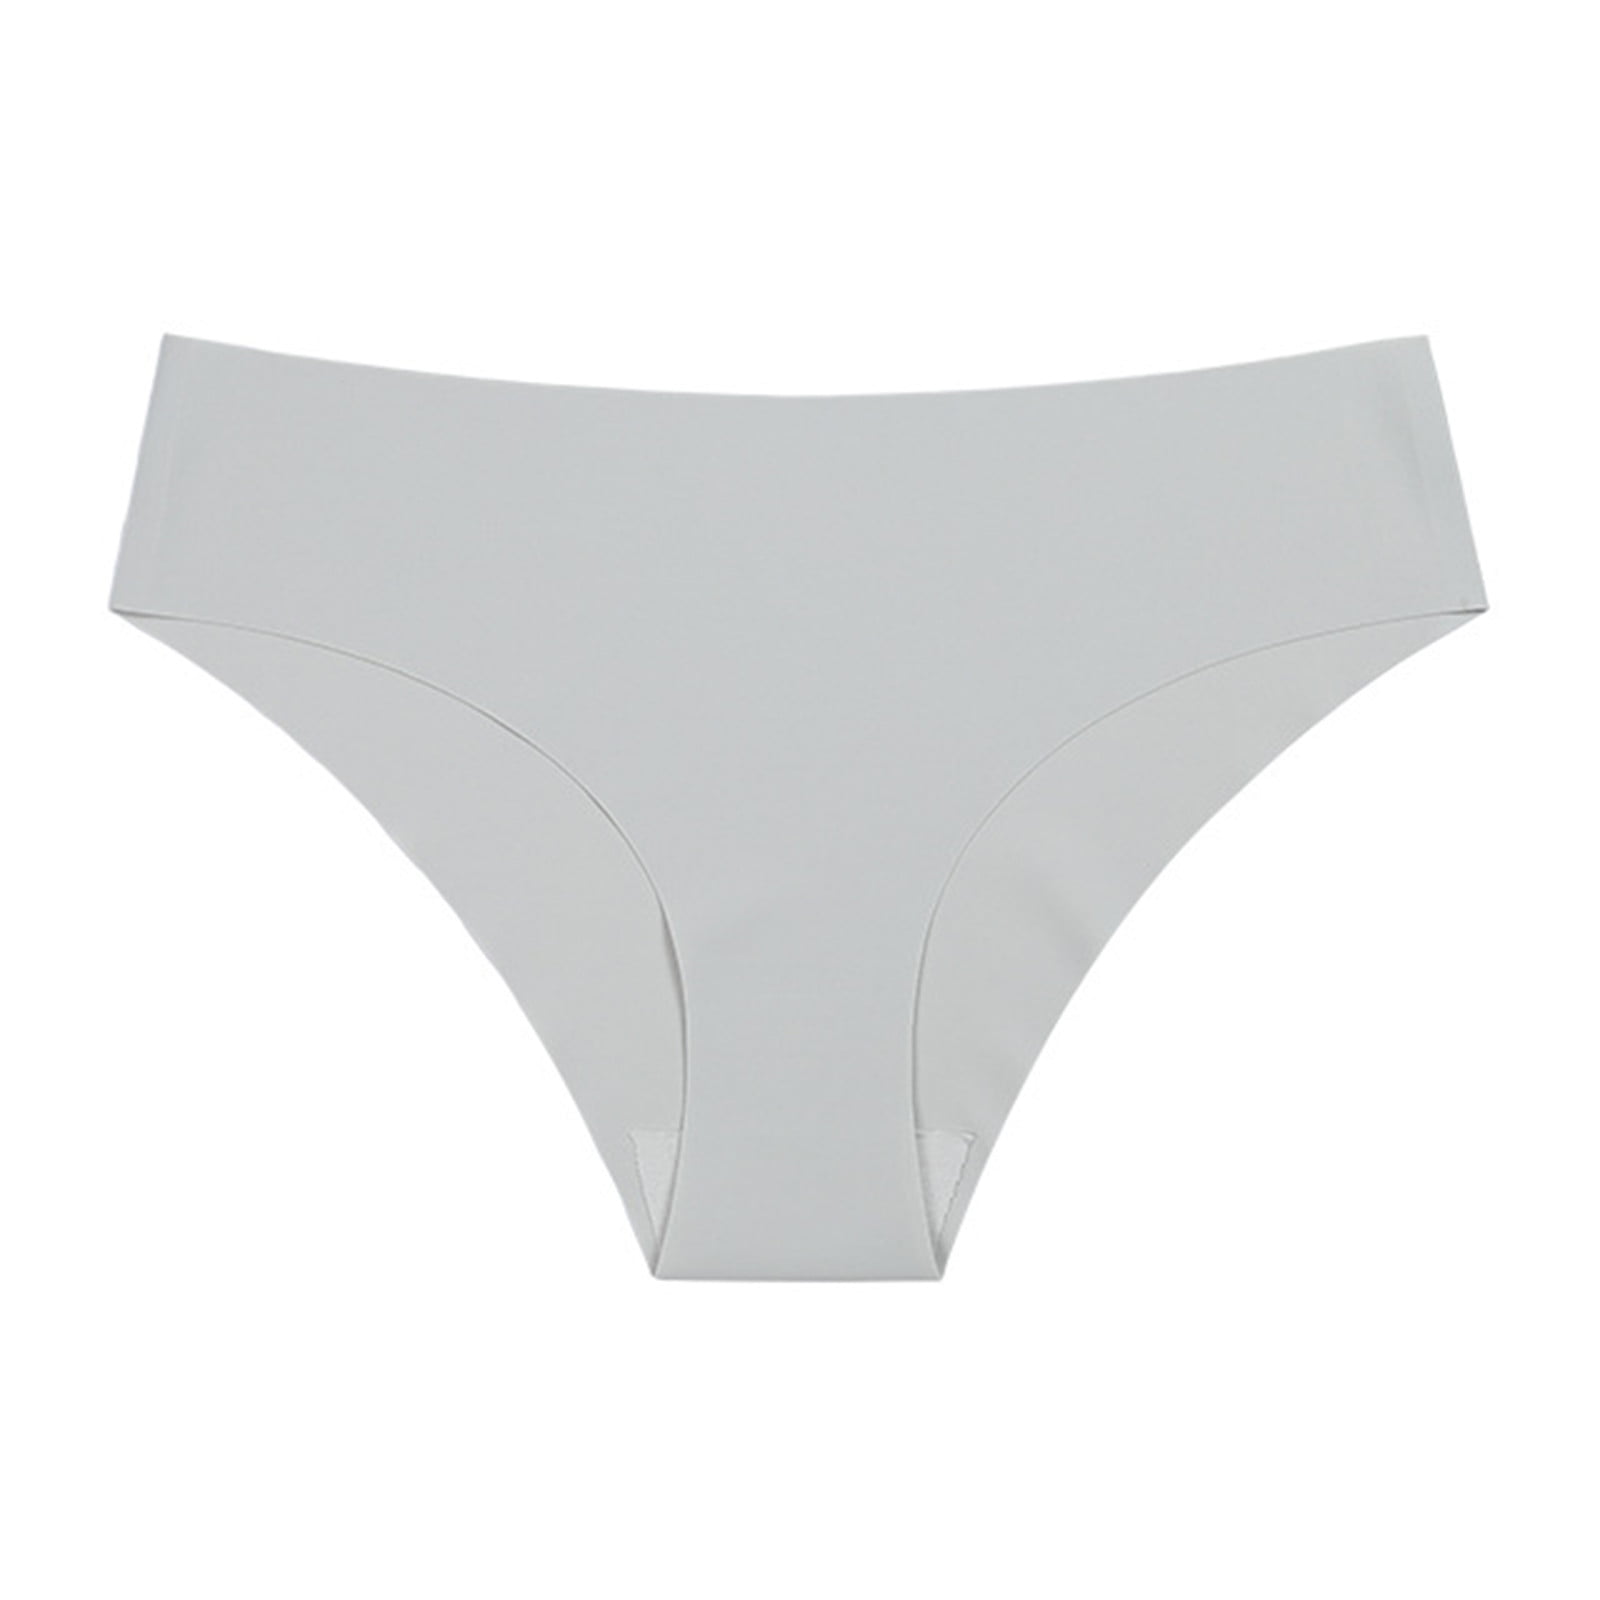 Qcmgmg Ladies Panties Seamless Low Rise Cheeky Bikini Underwear